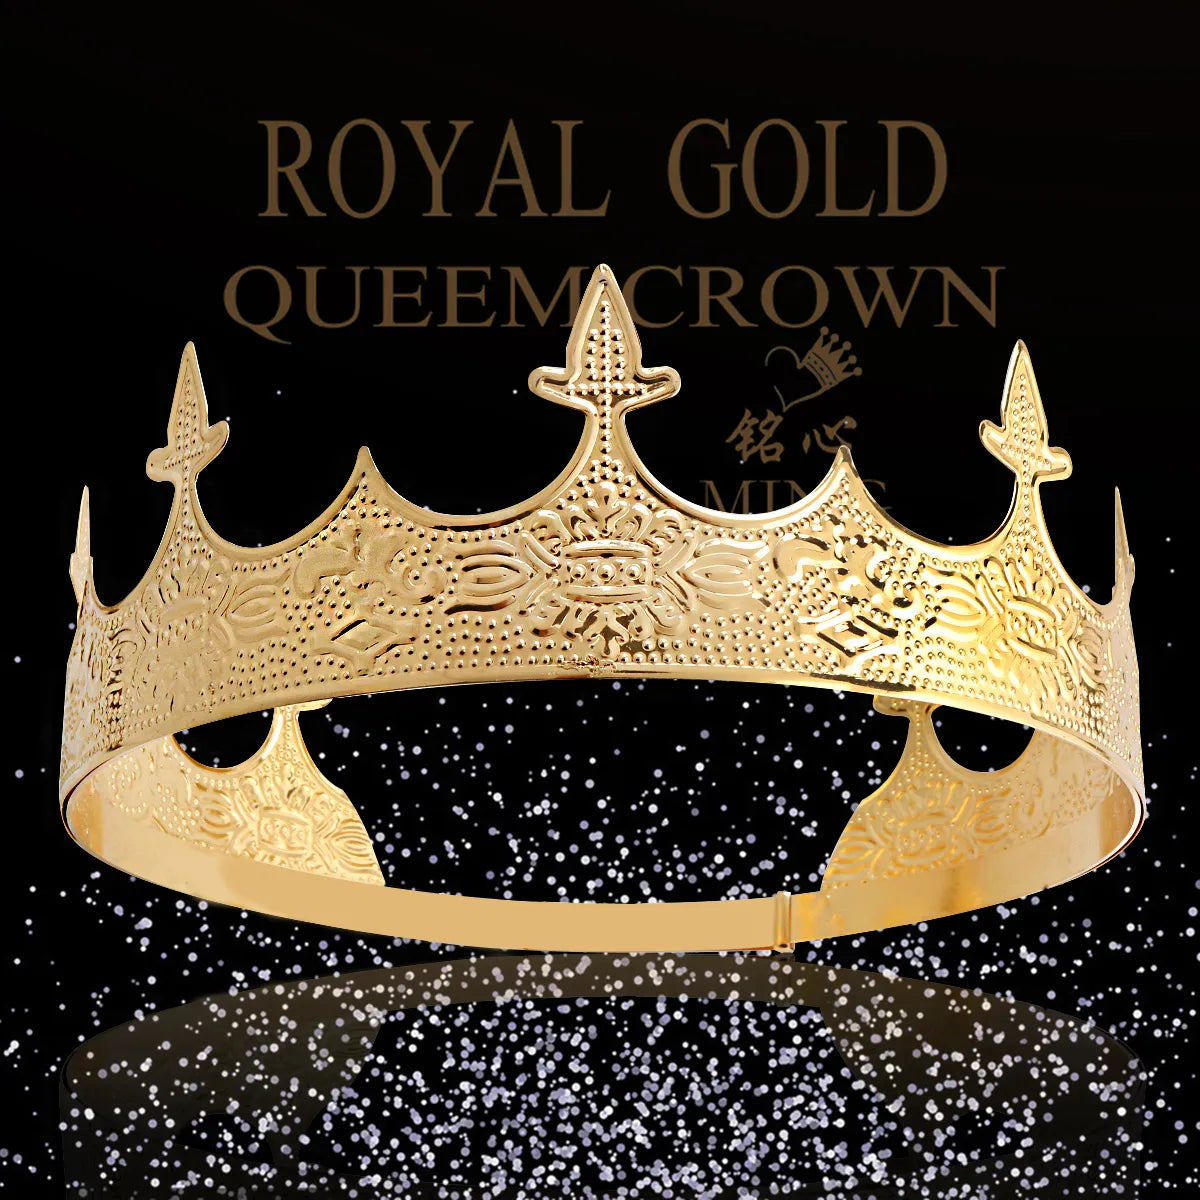 Vintage Royal King Crown For Men Round Metal Costume Crown – TulleLux  Bridal Crowns & Accessories